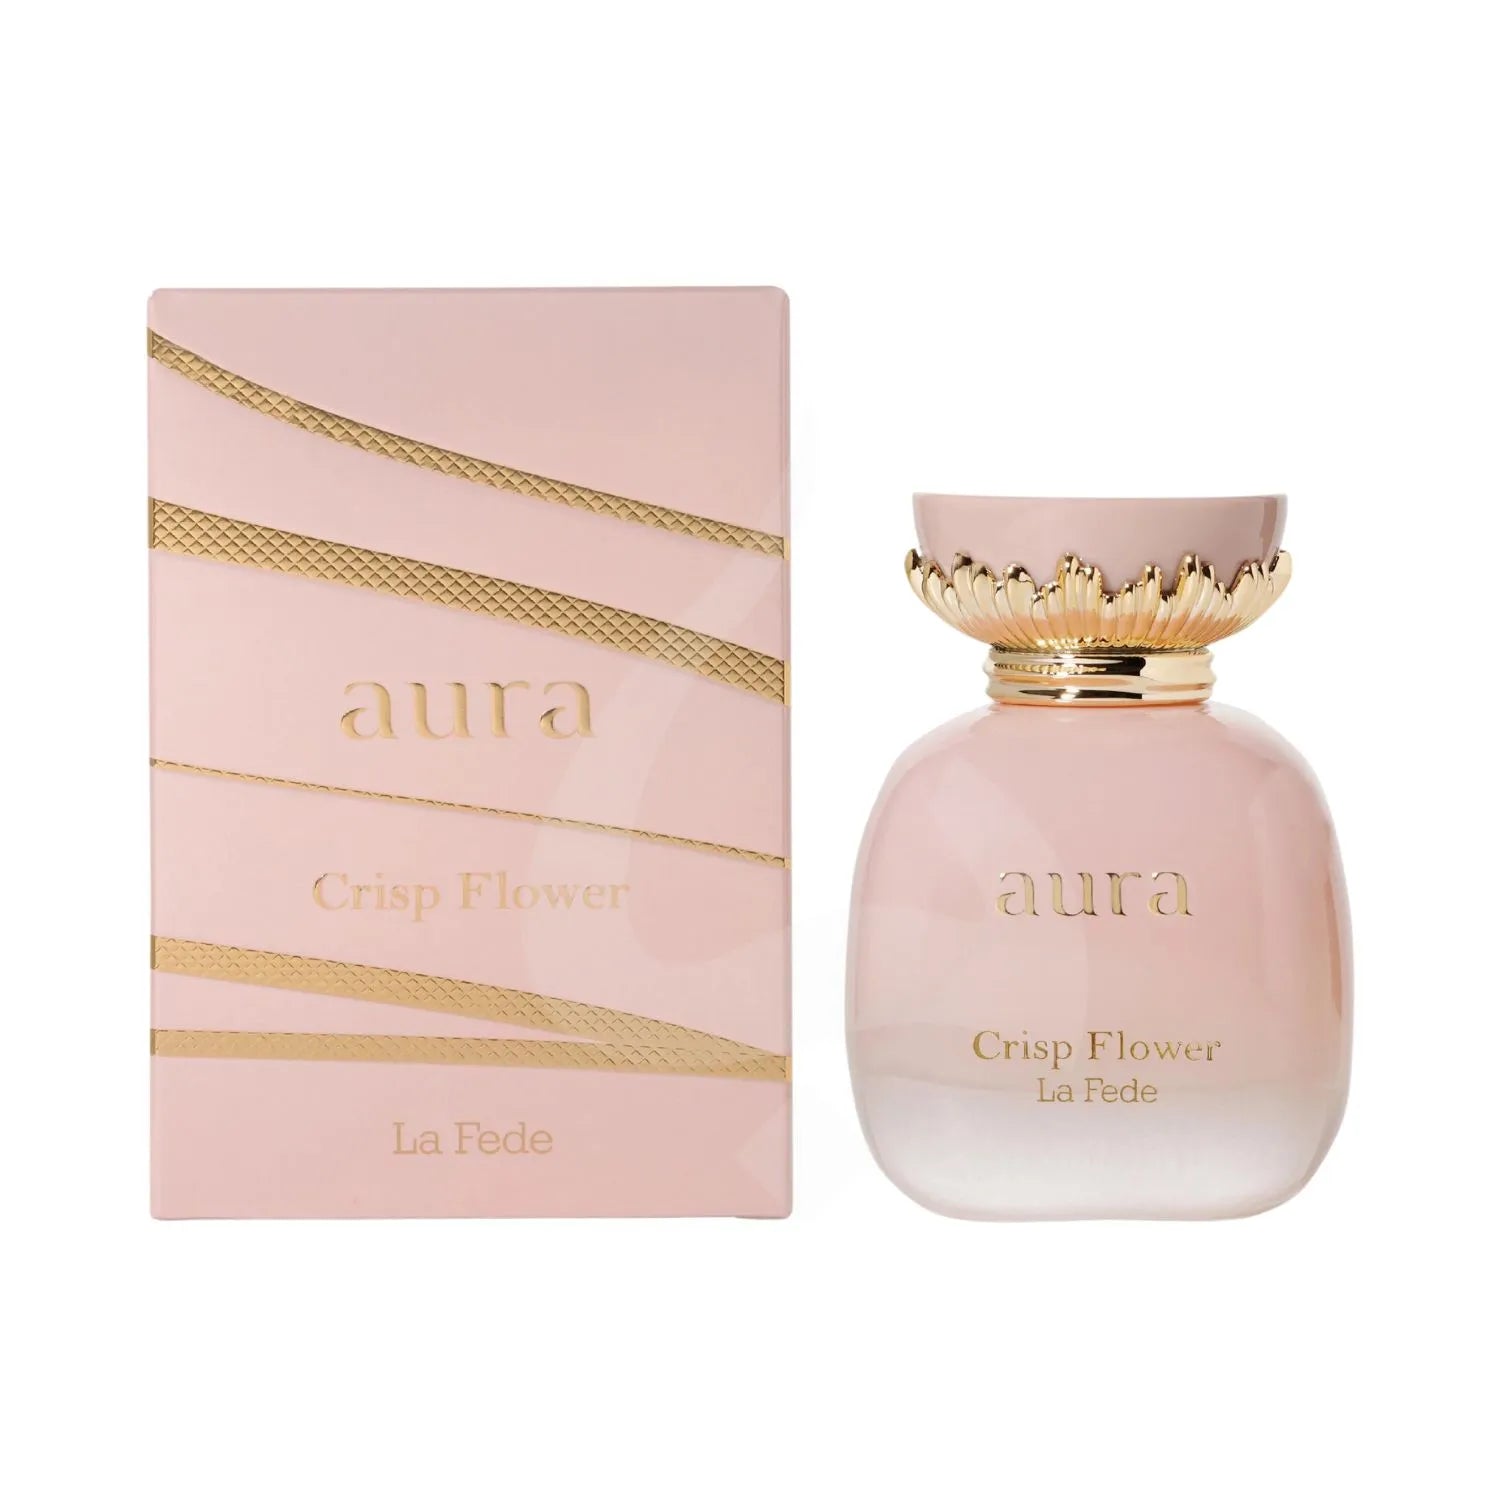 La Fede Aura Crisp Flower Perfume Package